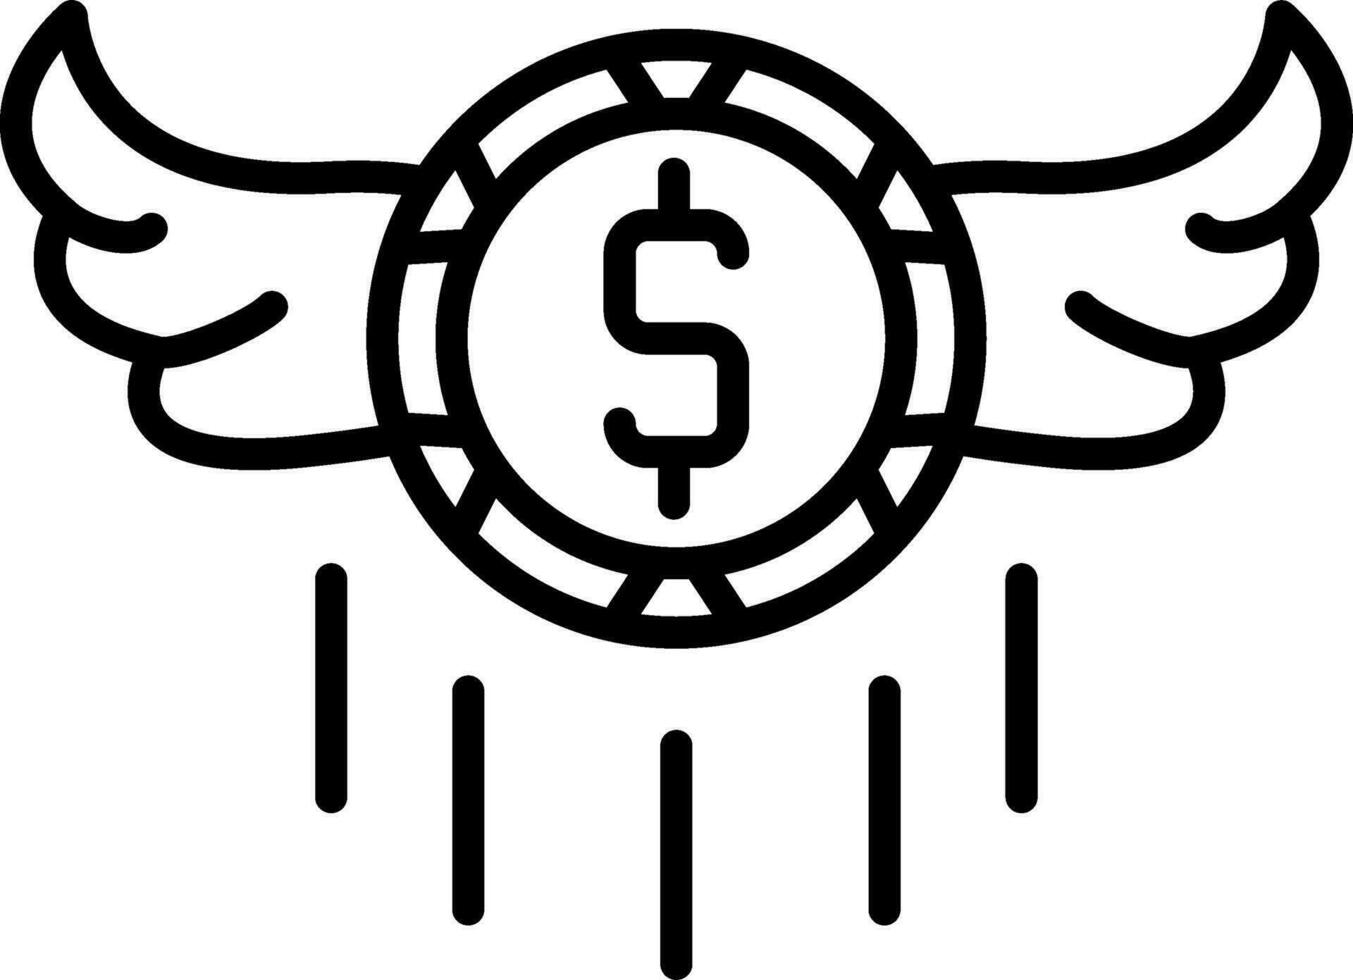 fliegend Geld Vektor Symbol